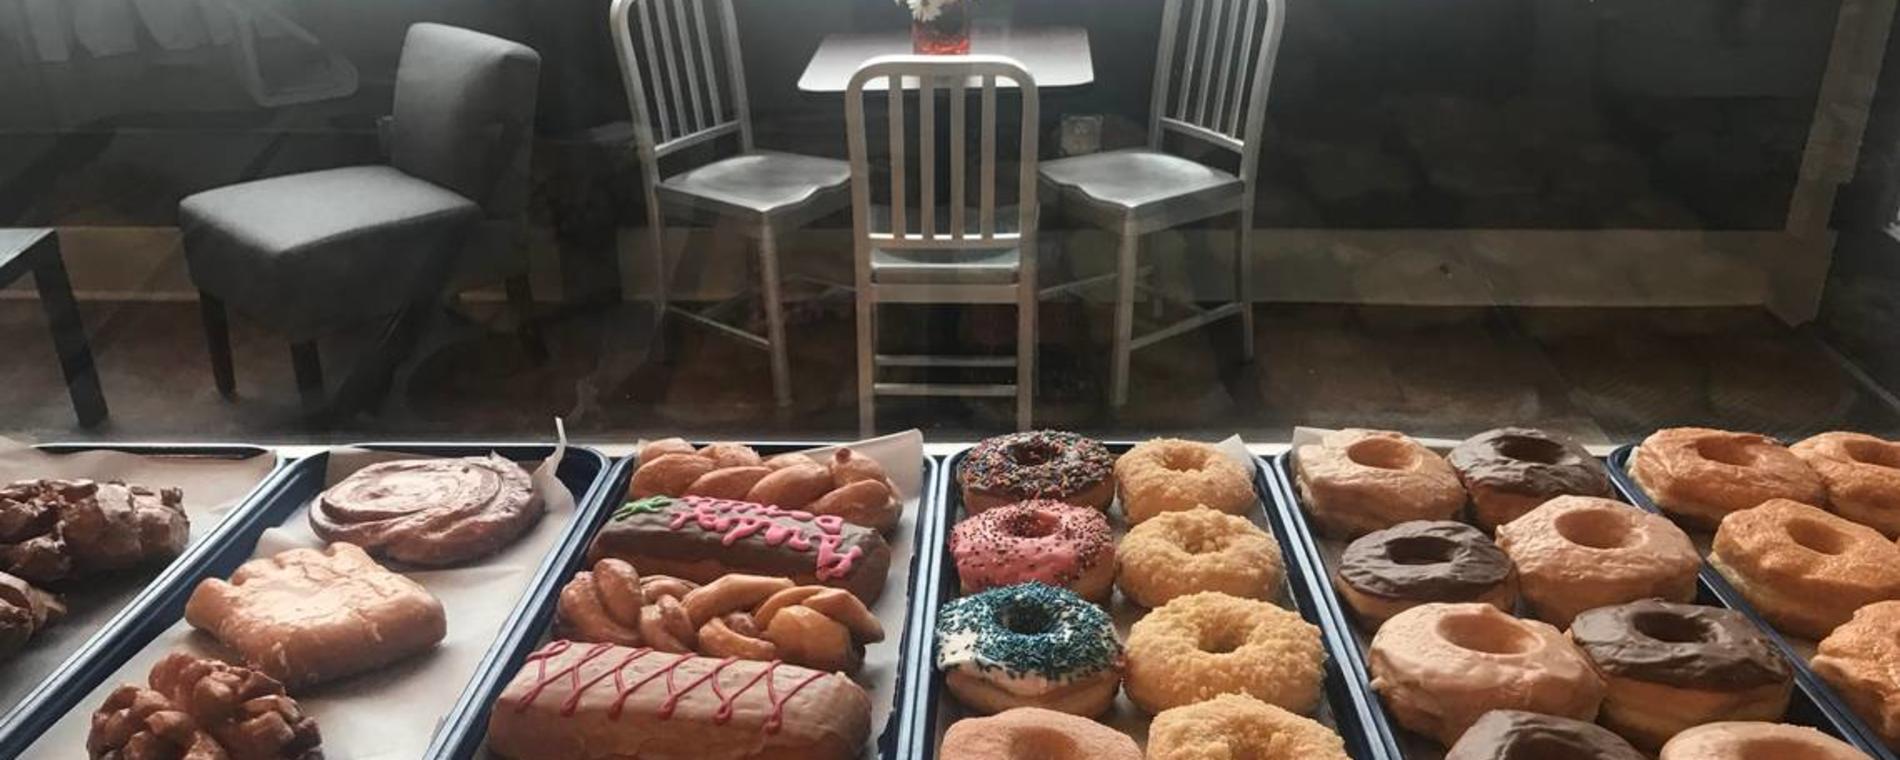 Paradise Donuts donut trays Visit Wichita